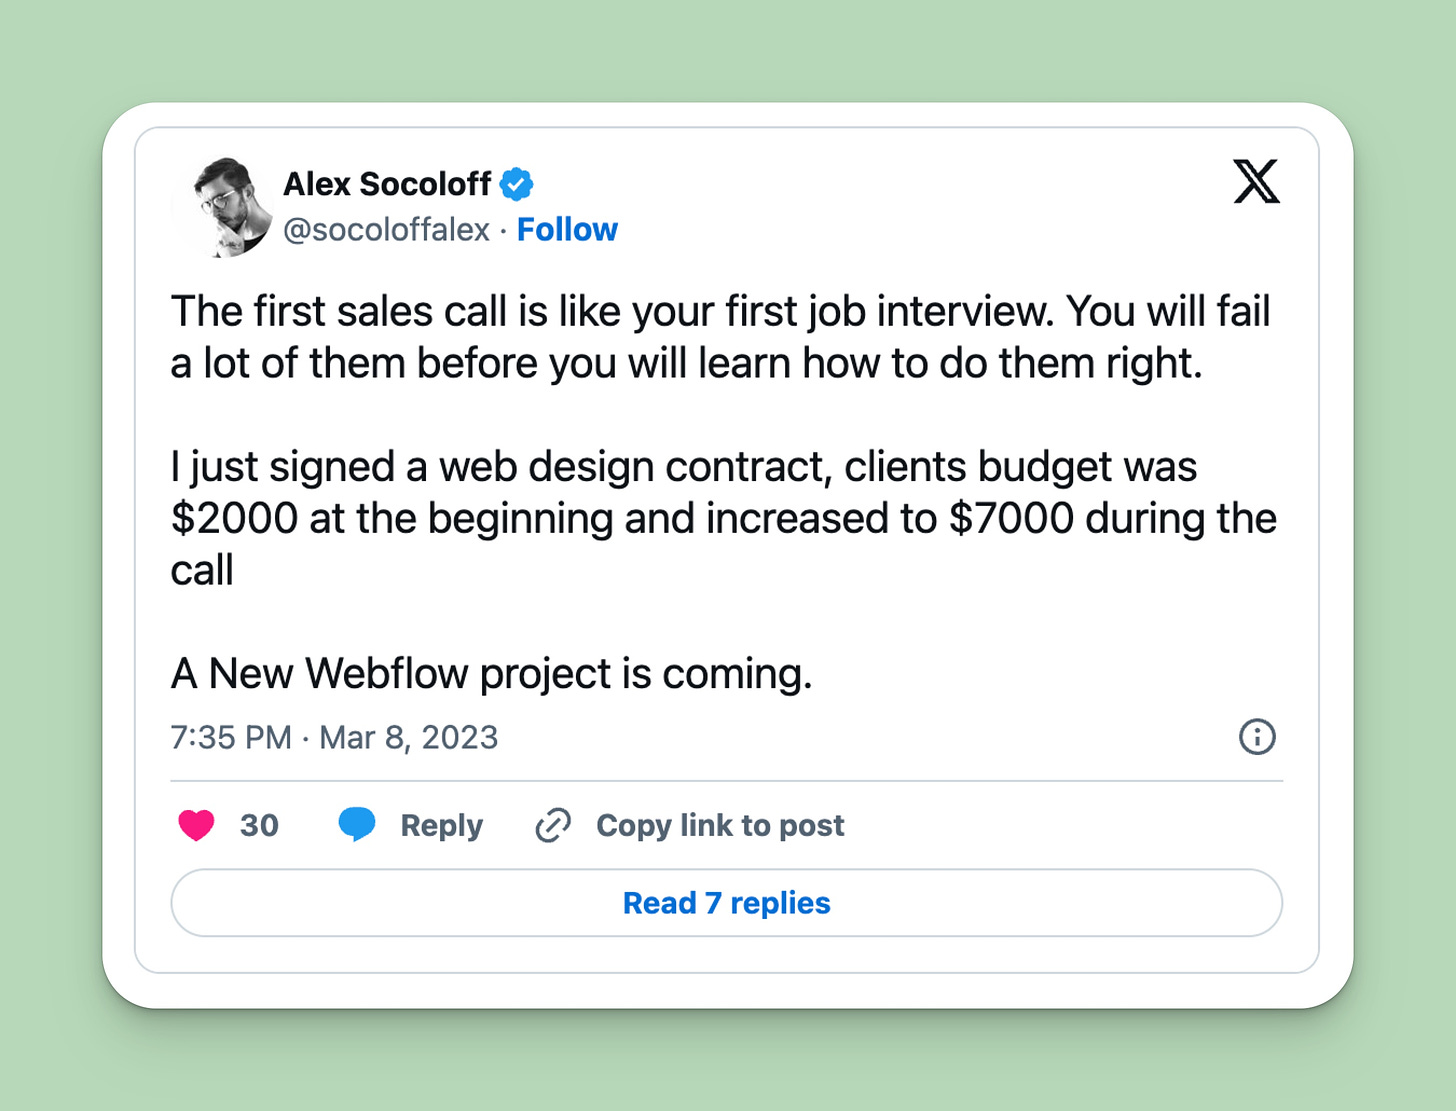 Tweet by Alex Socoloff on upselling his Webflow projects